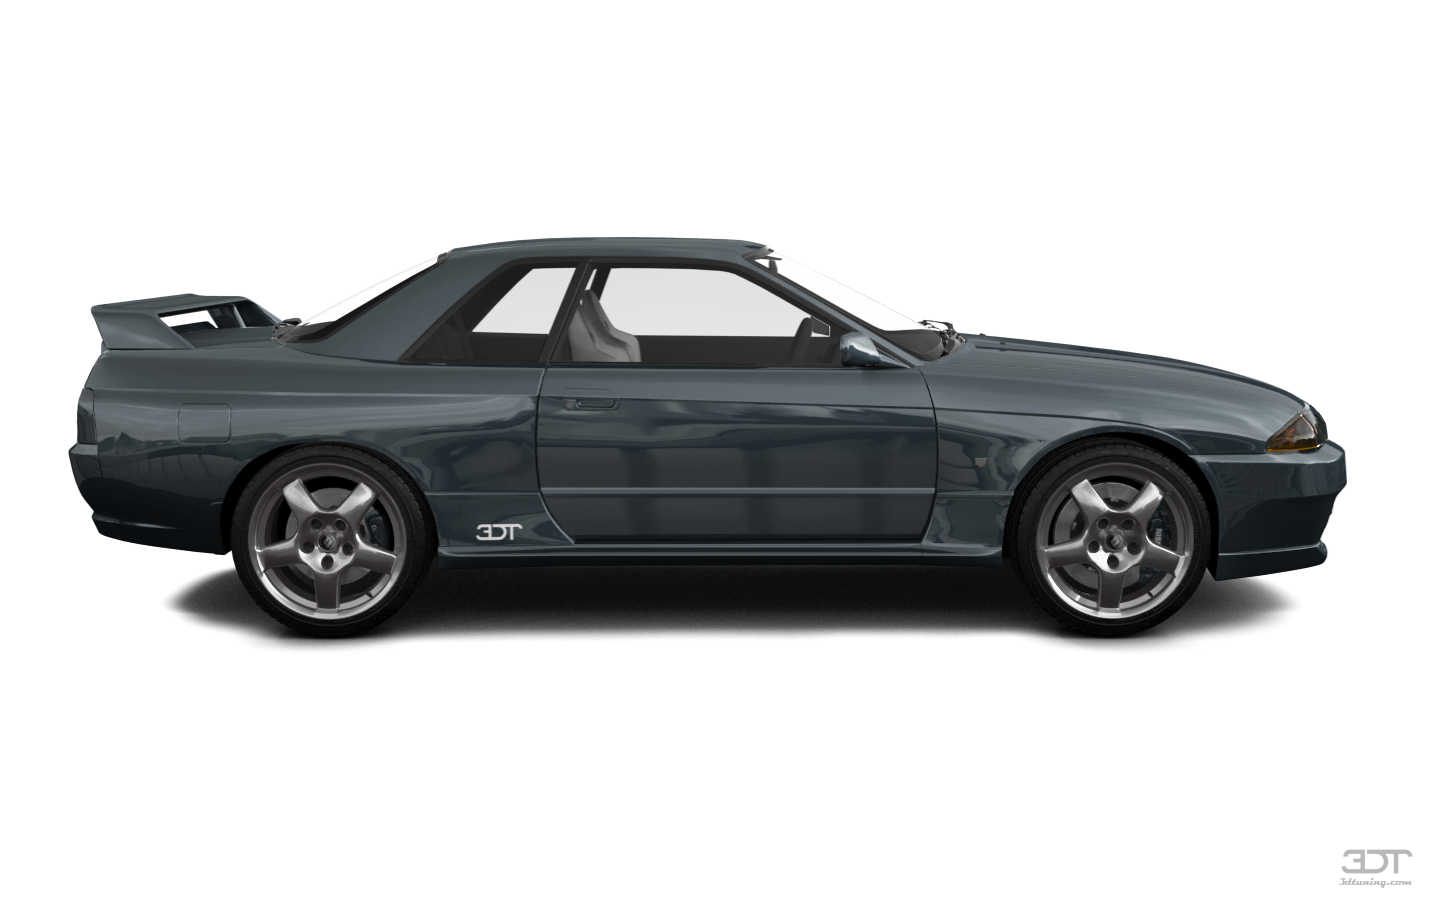 Nissan Skyline GT-R'89